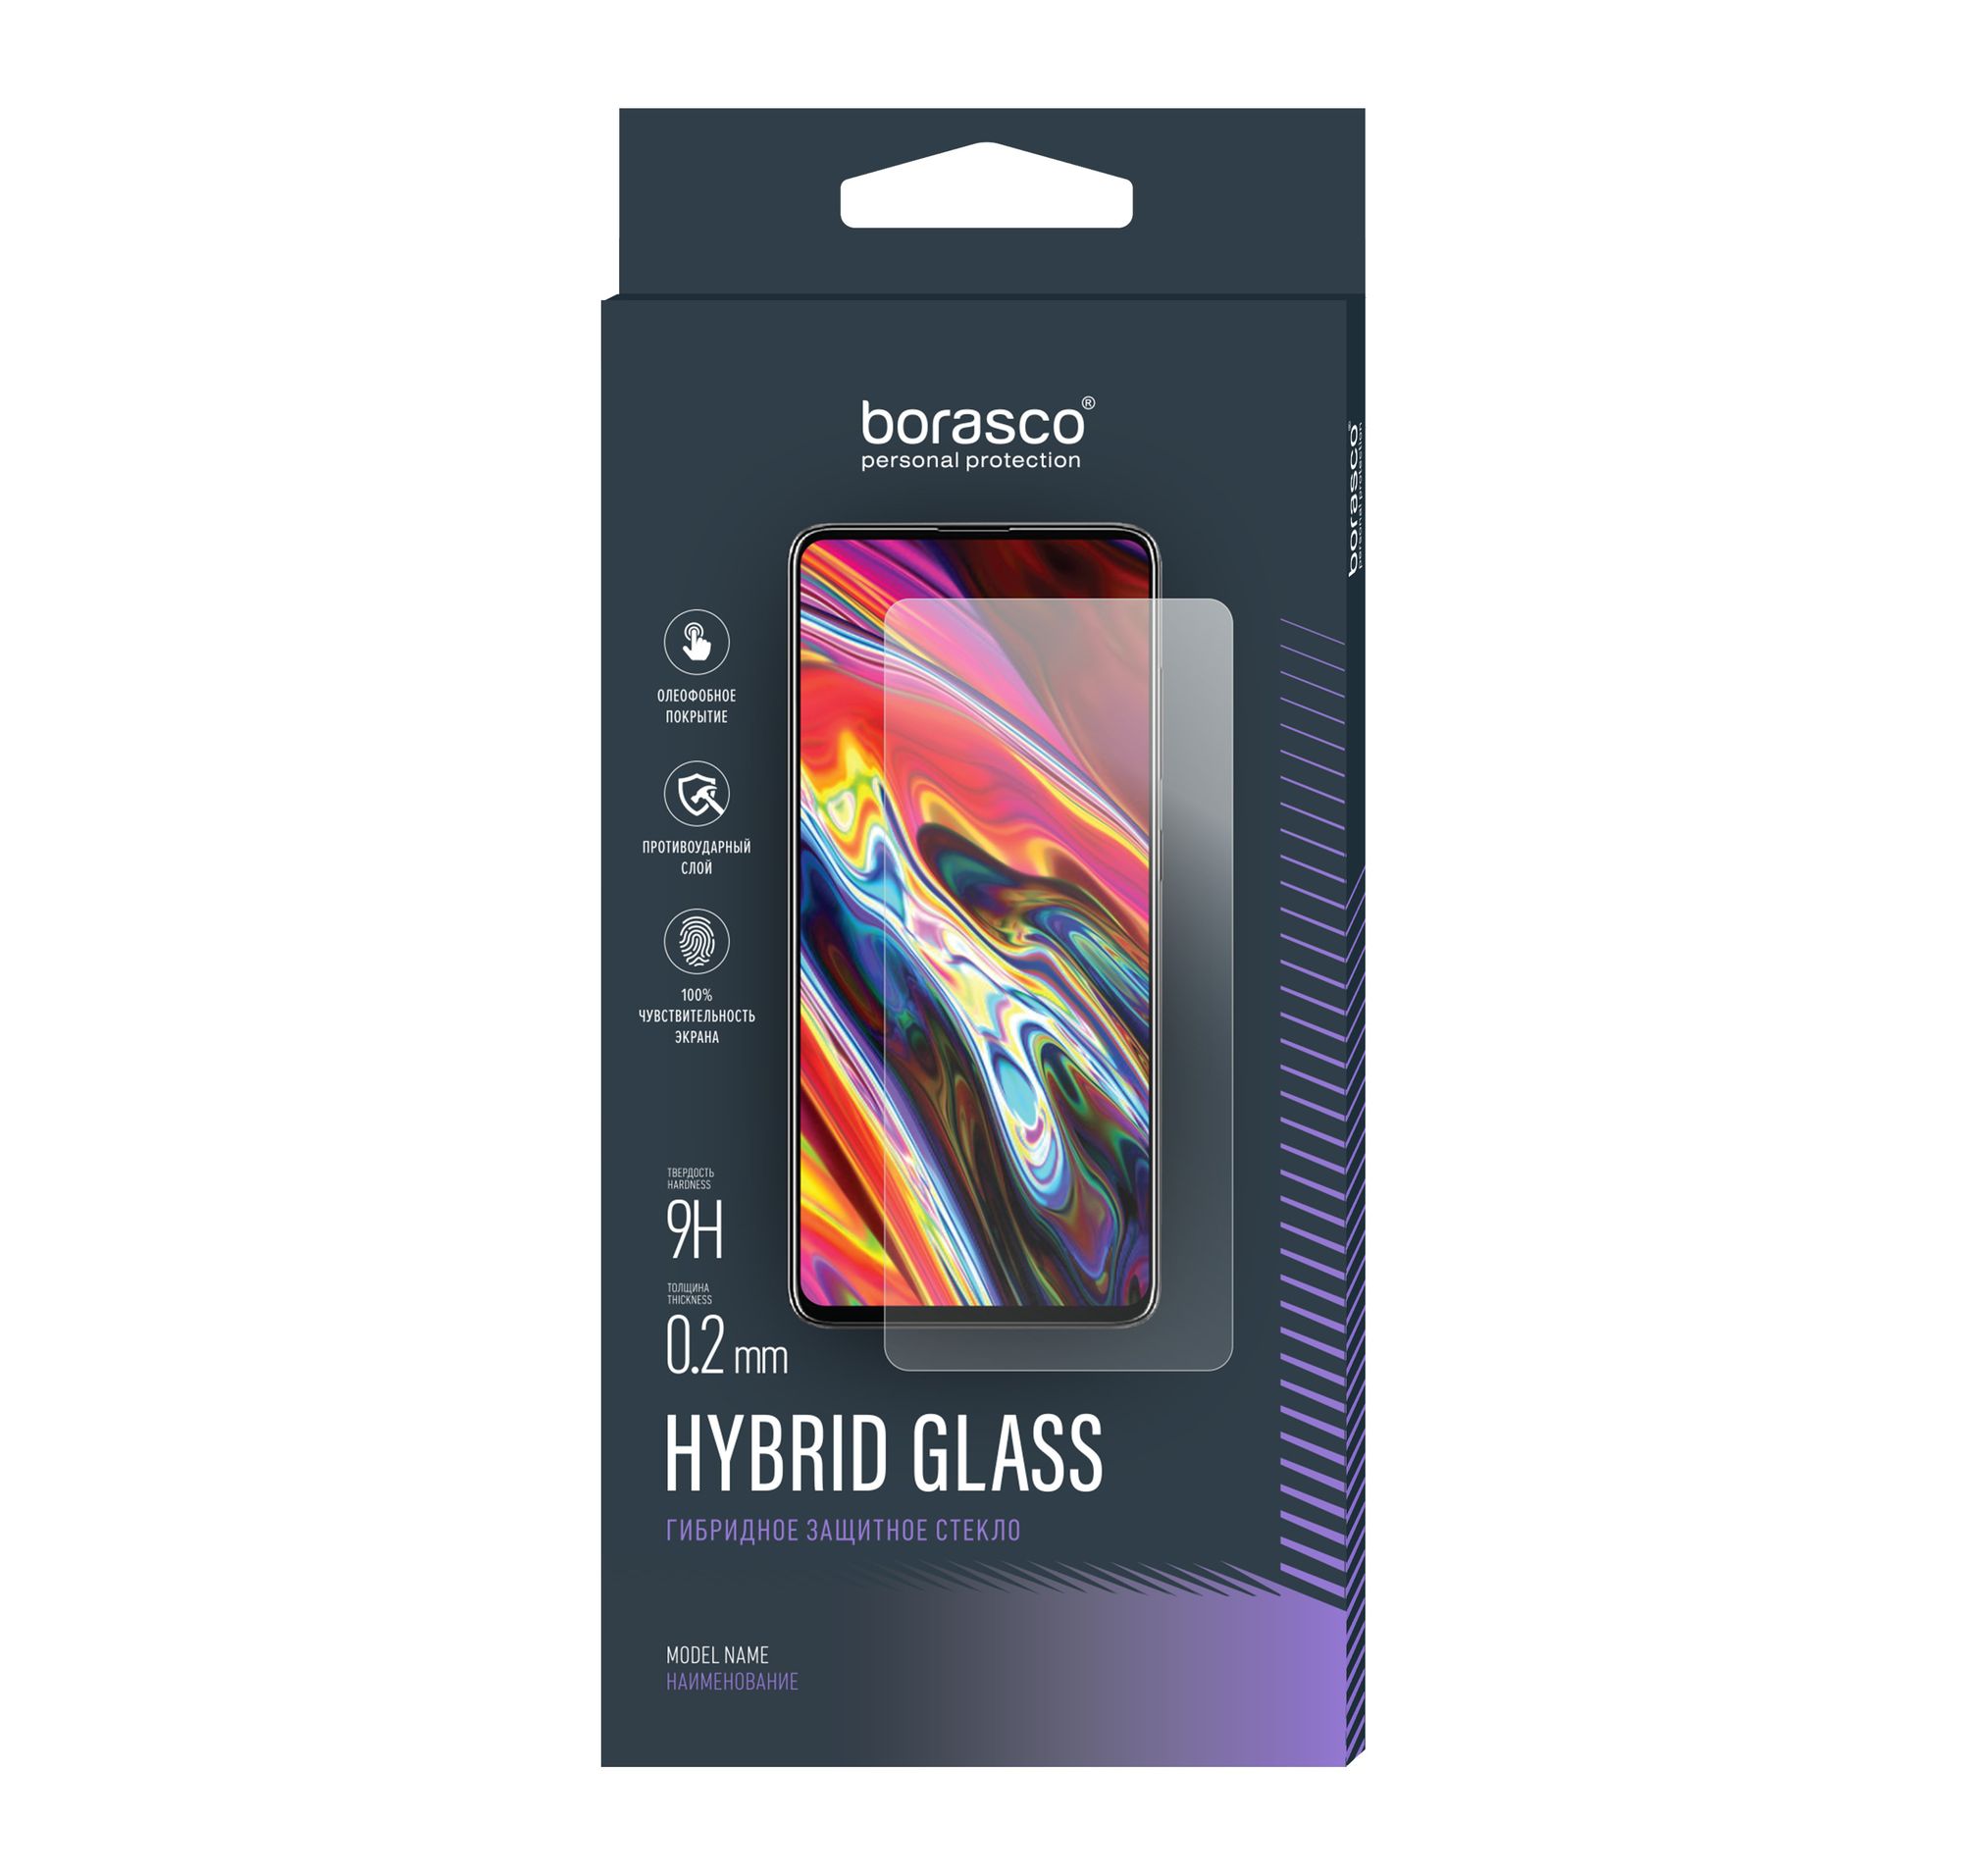 Стекло защитное Hybrid Glass VSP 0,26 мм для Huawei Y9 2018 стекло защитное mediagadget huawei y6 2018 hybrid прозрачное